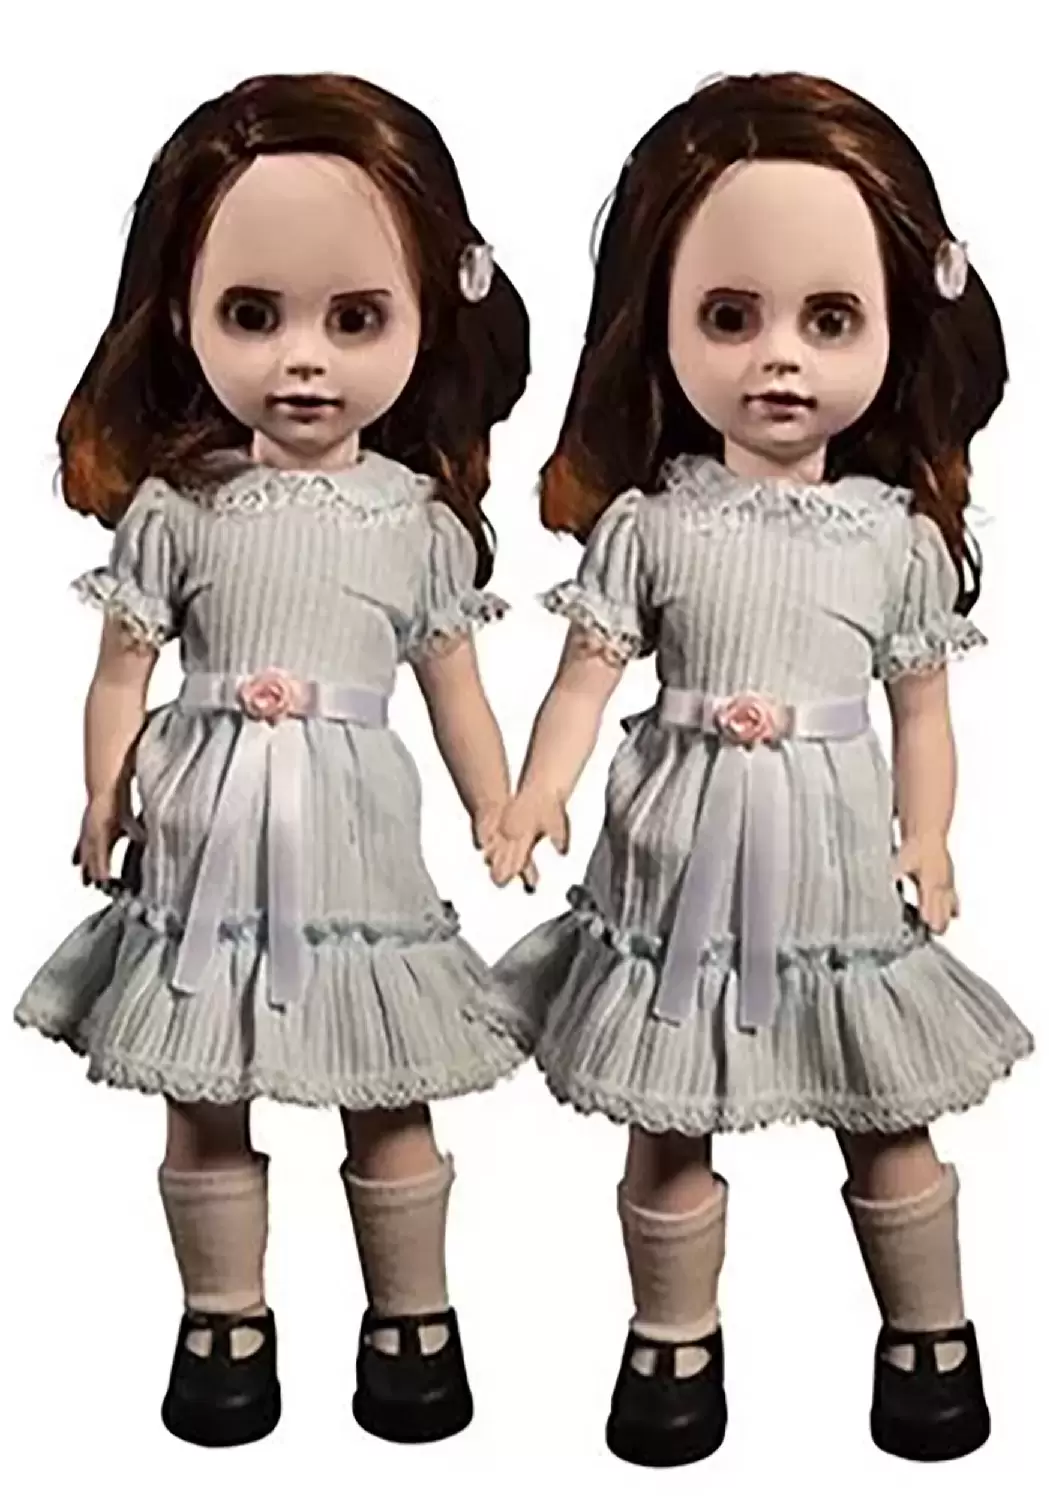 Living Dead Dolls LDD - The Shining - Talking Grady twins